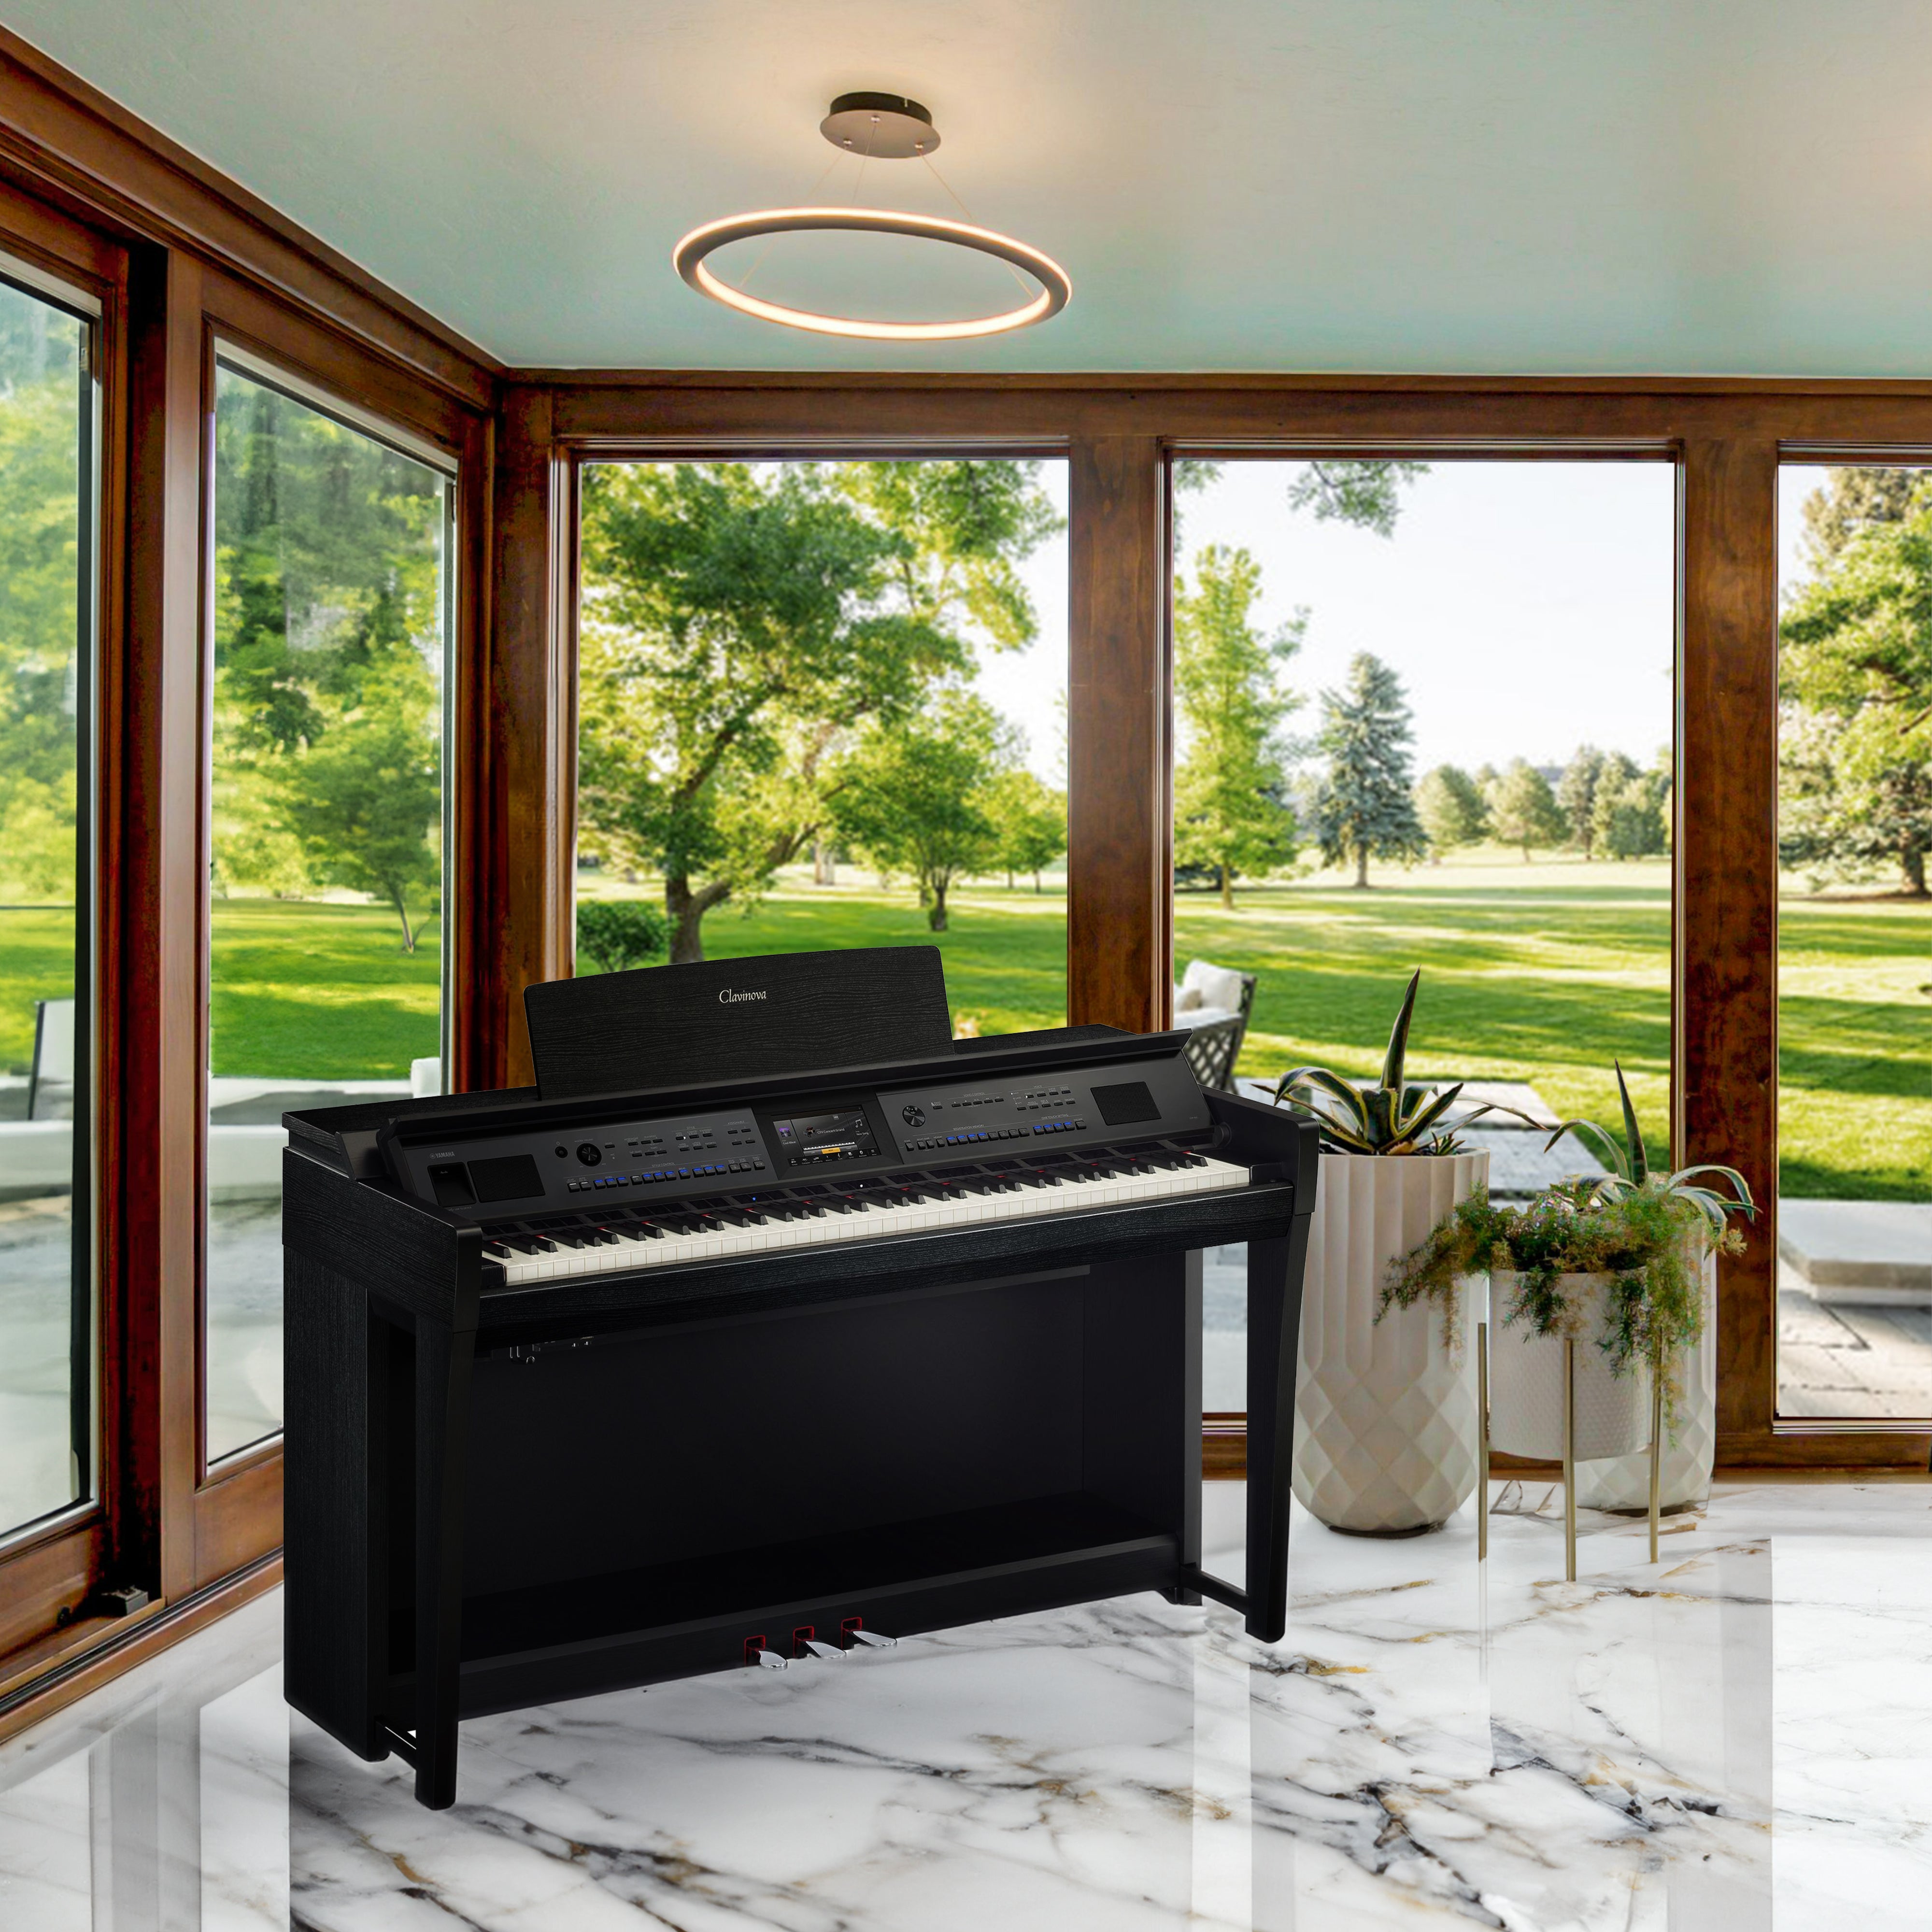 Yamaha Clavinova CVP-905 Digital Piano - Matte Black - in a stylish room overlooking a golf course